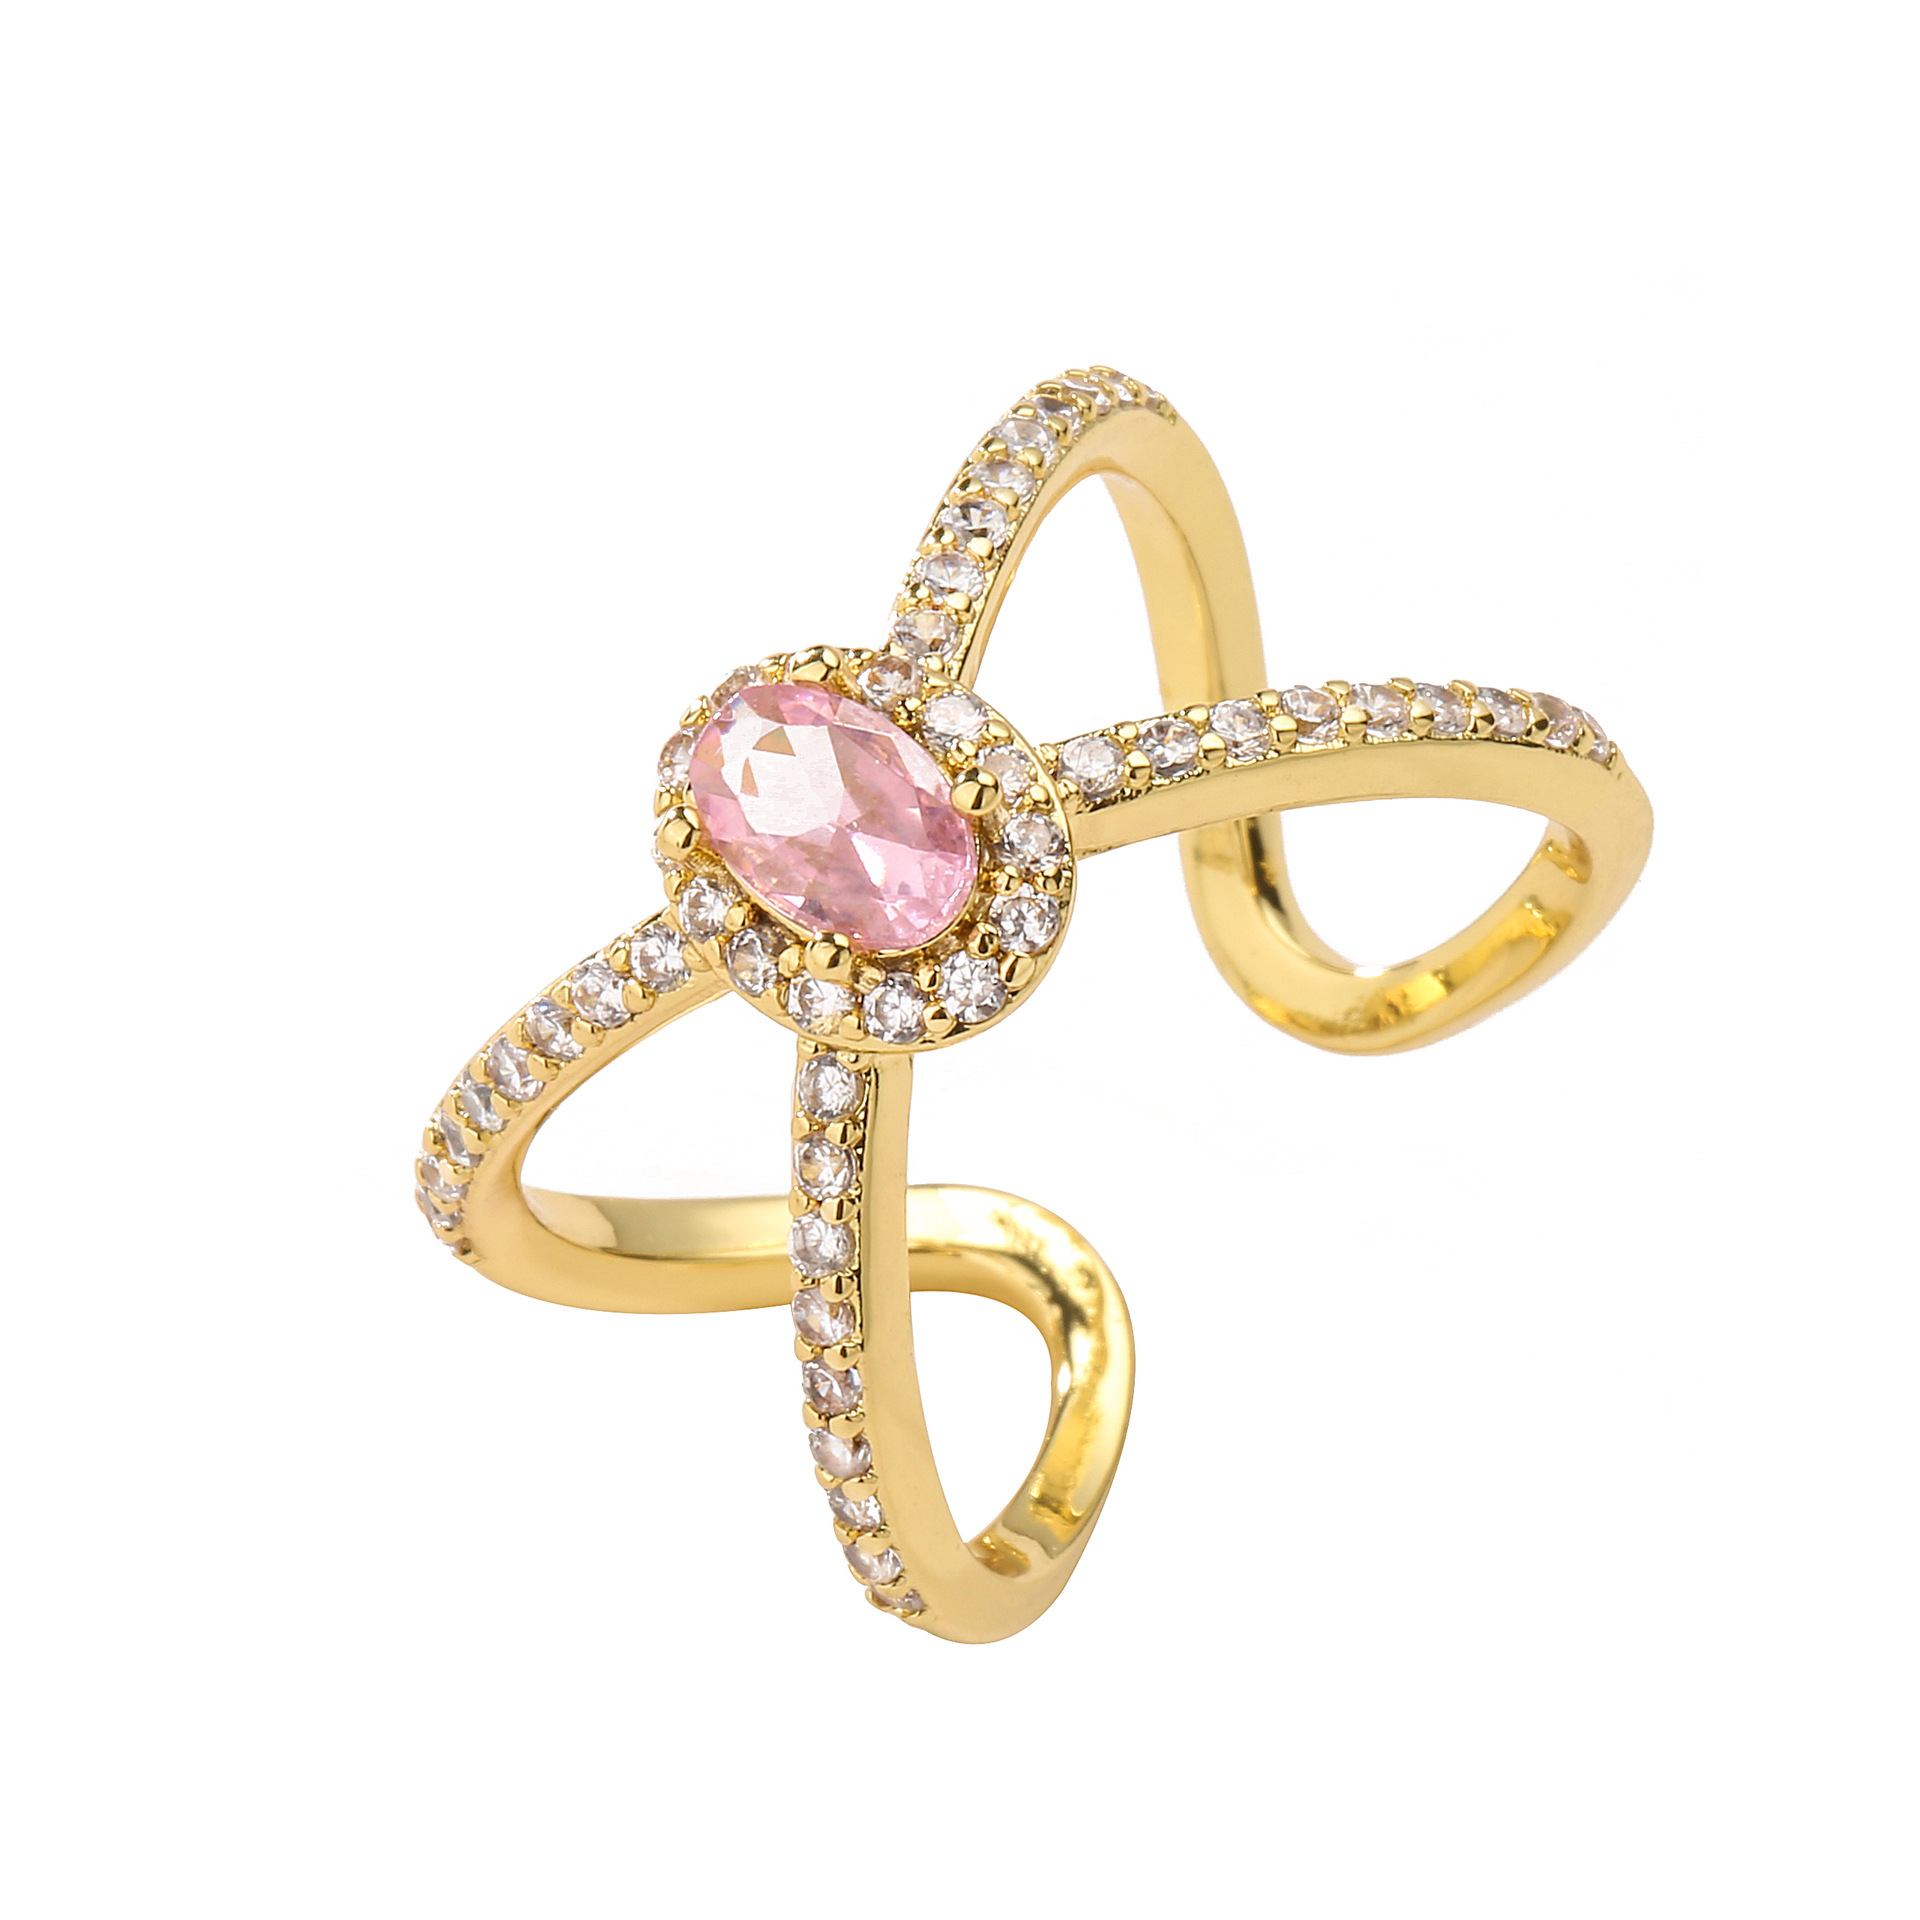 3:Gold pink diamond